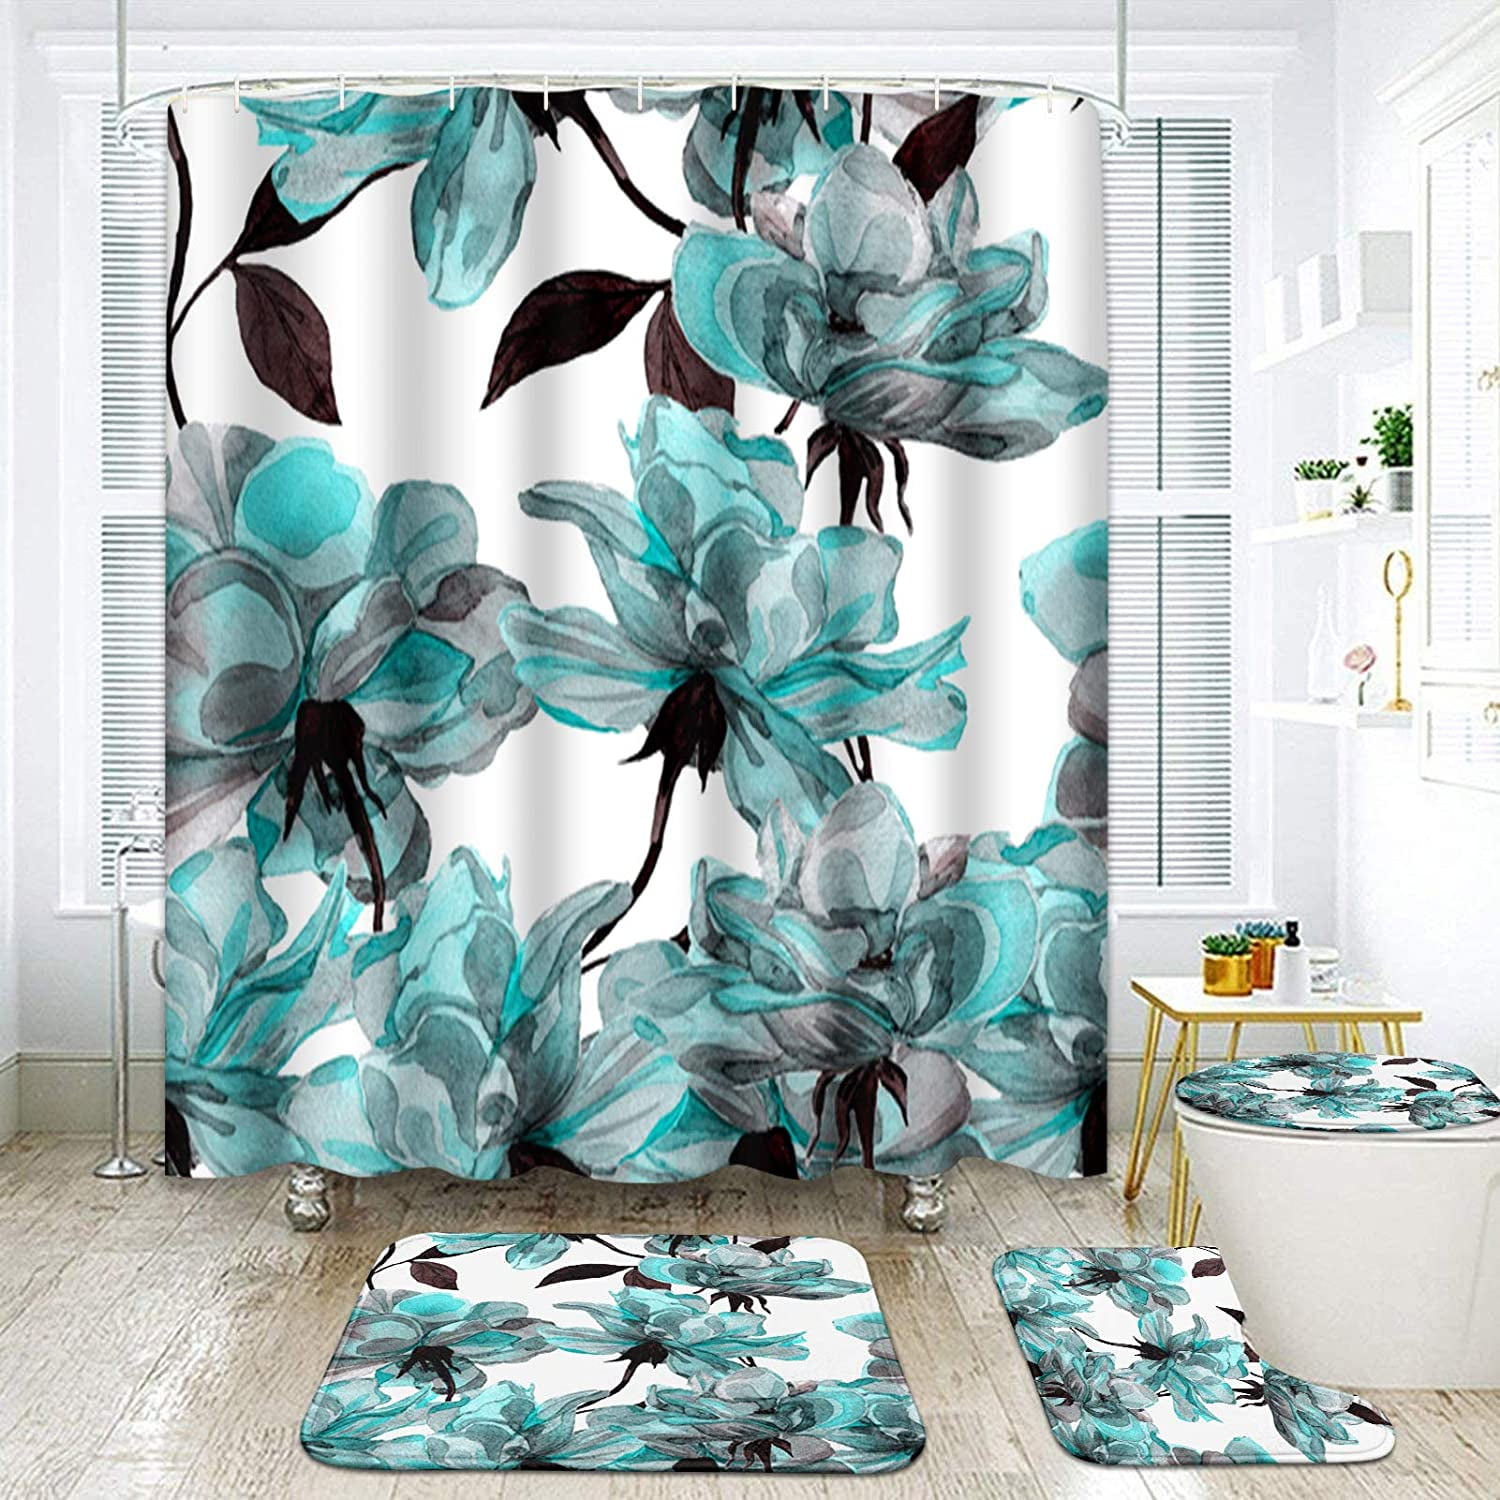 Details about   Floral Shower Curtain Bathroom Rug Set Thick Bath Mat Non-Slip Toilet Lid Cover 